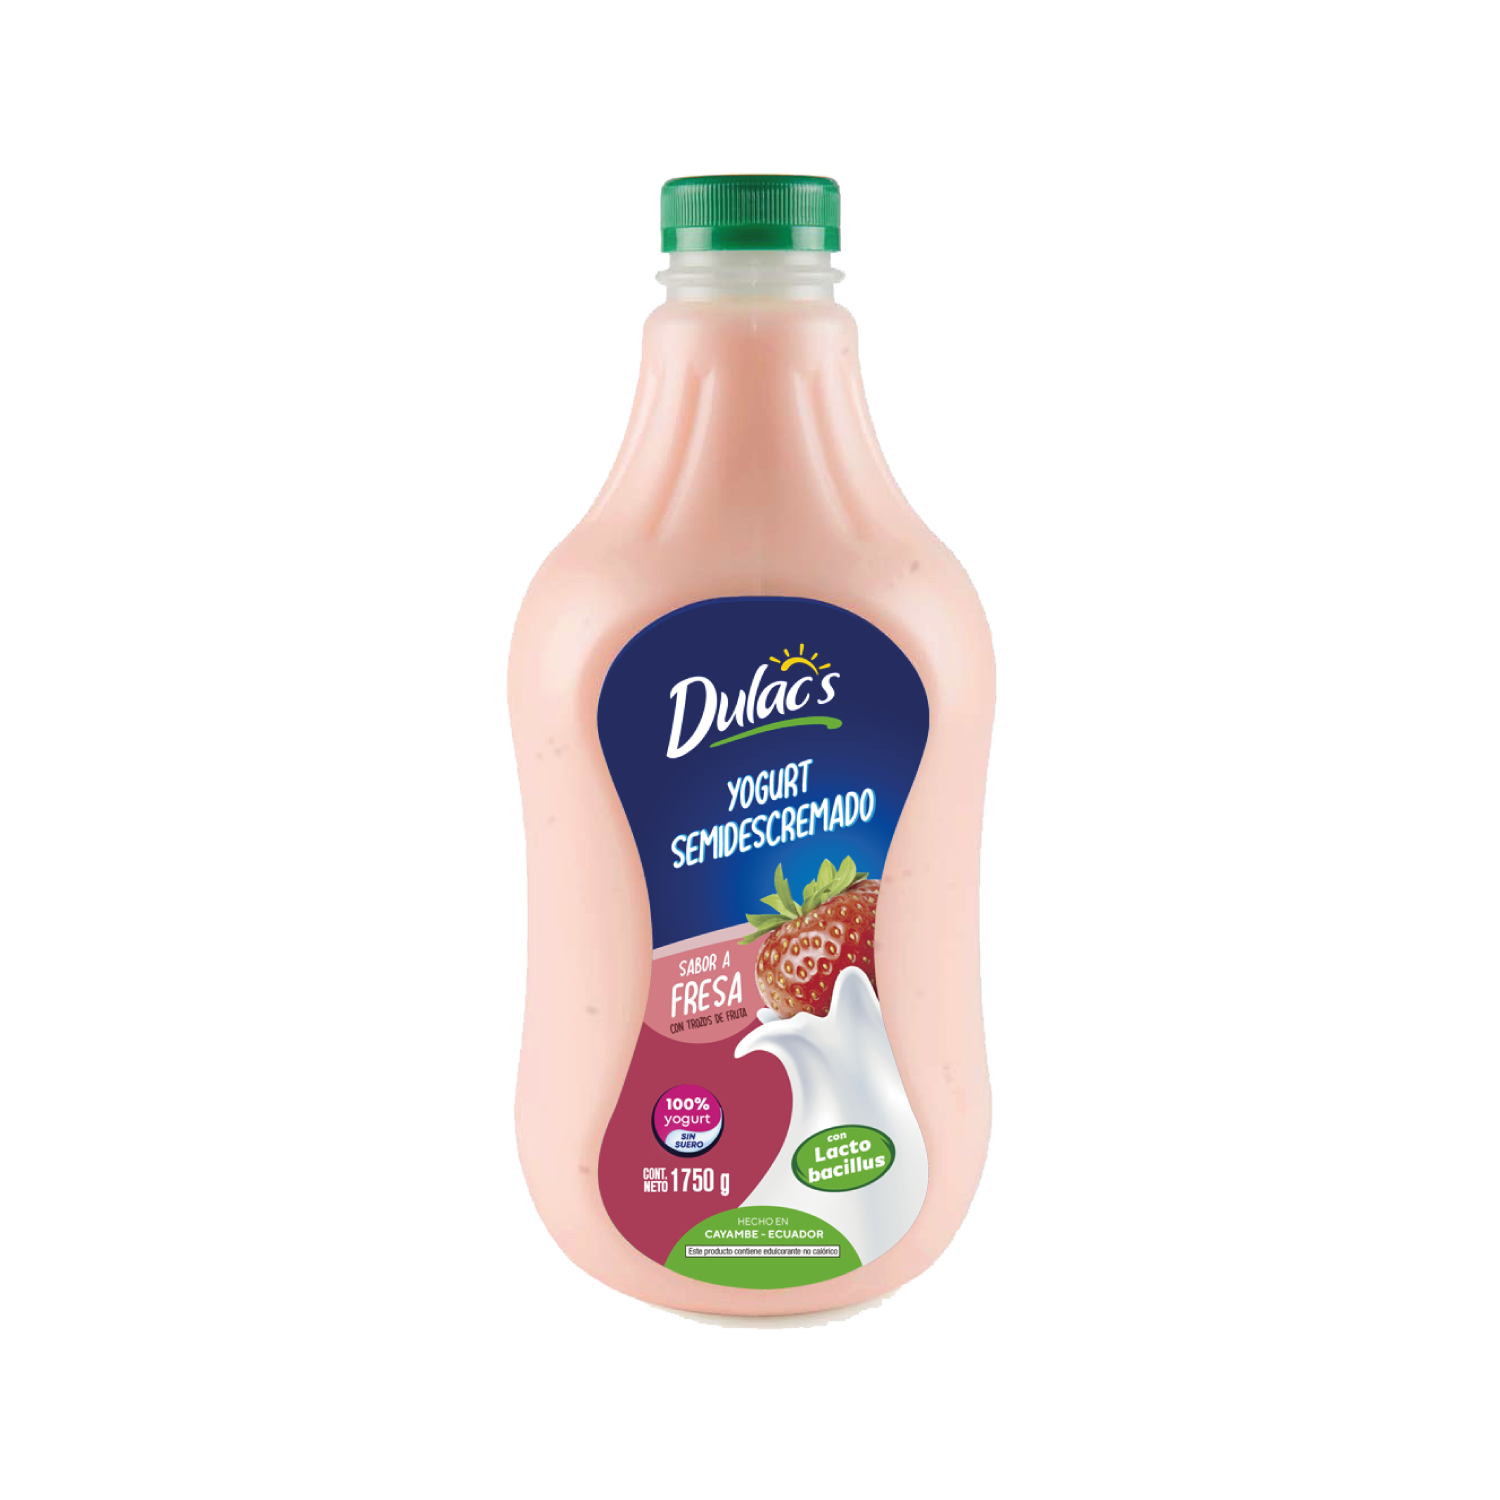 Dulacs Yogurt Frutas Semidescremado 1750G